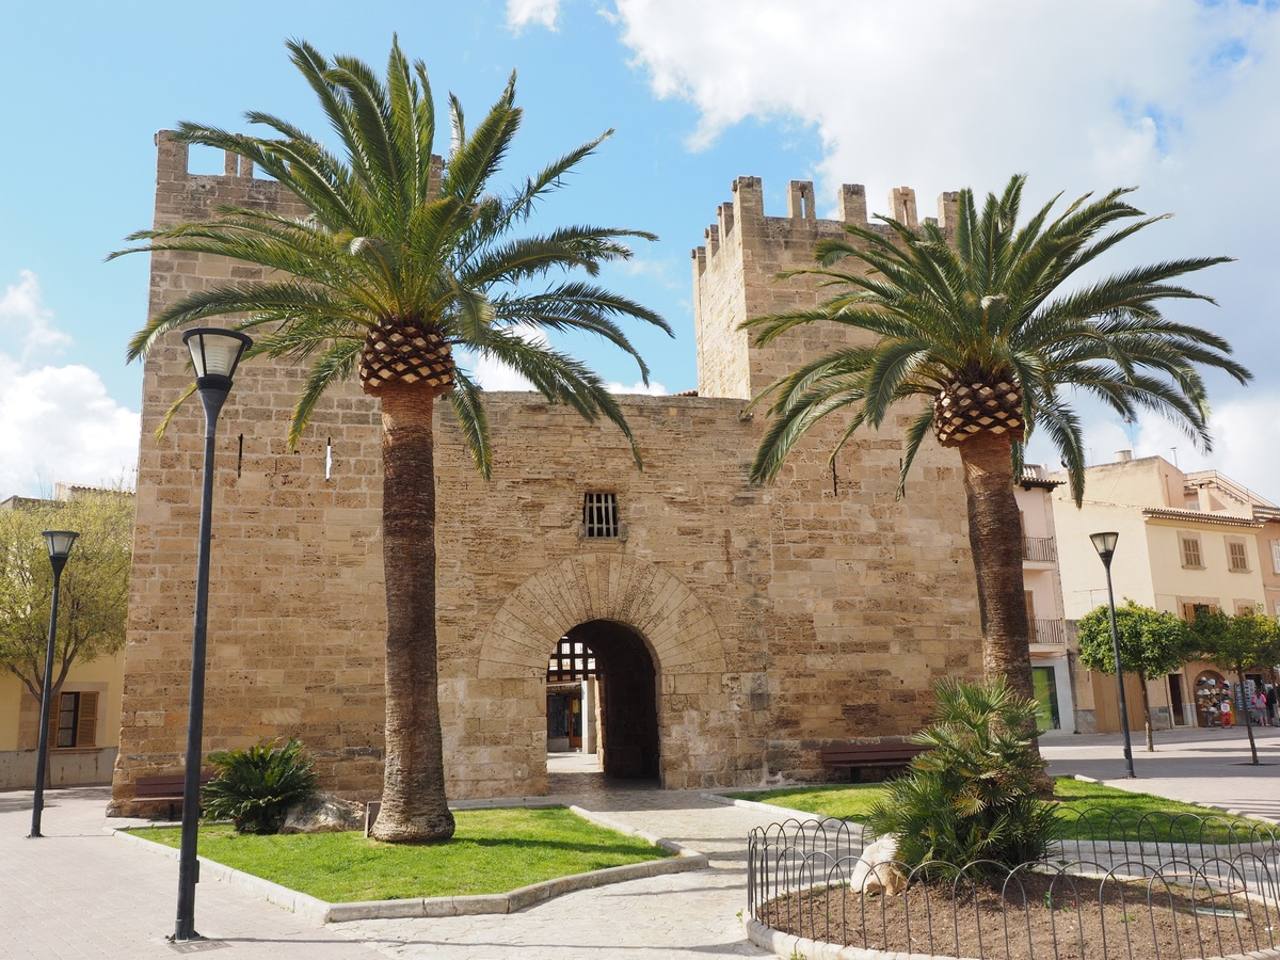 Gate to old town, Alcudia, Mallorca